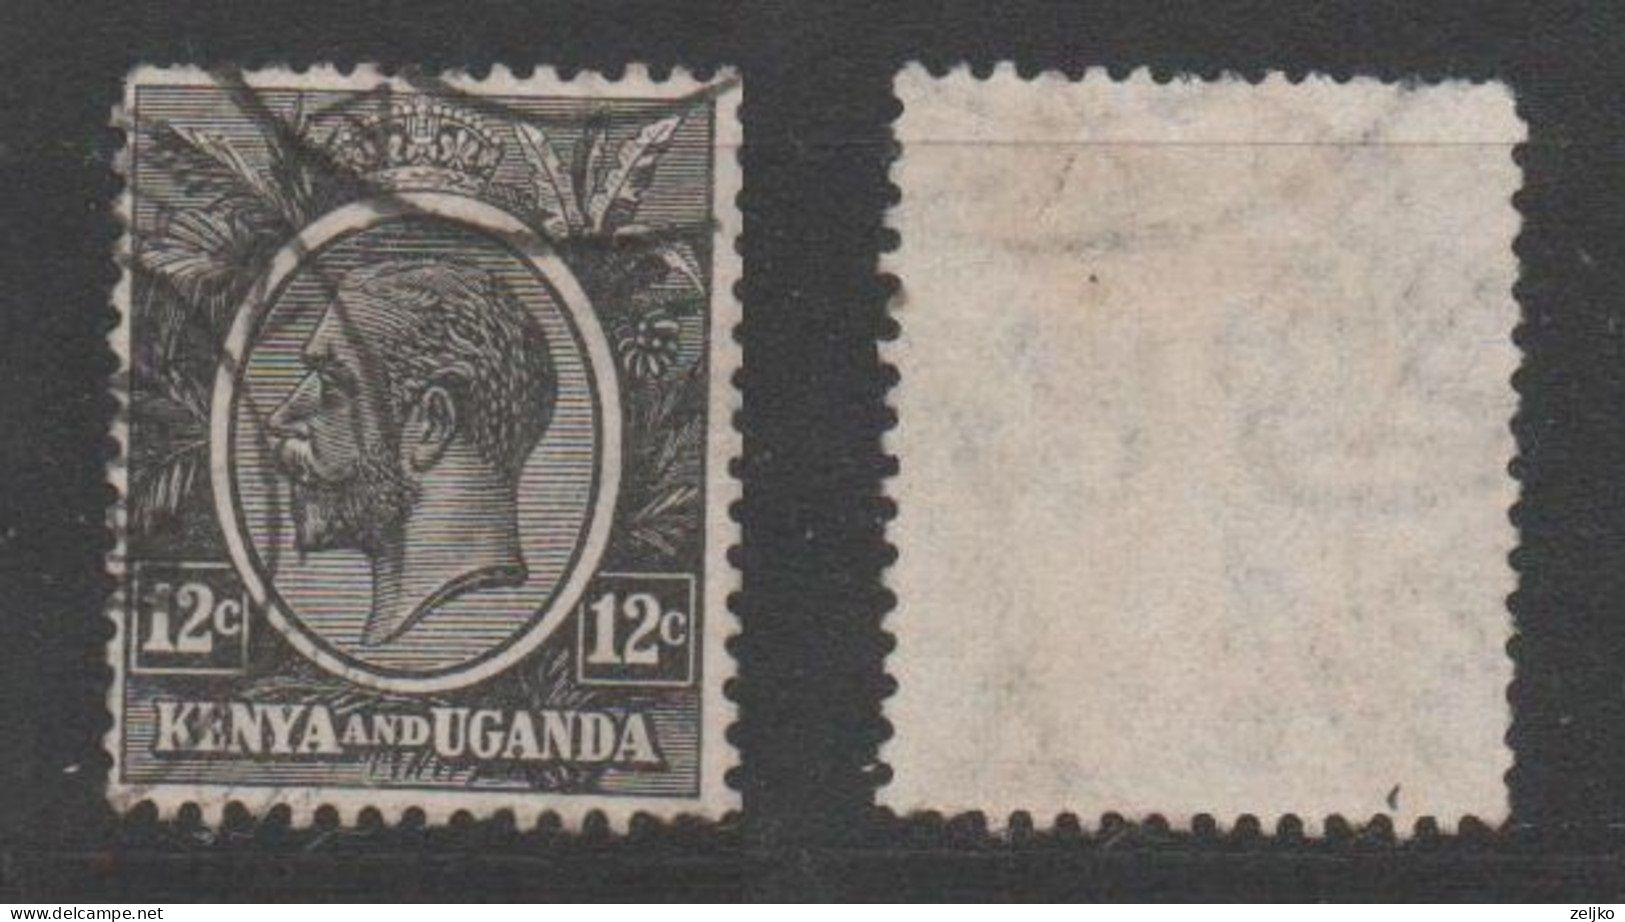 Kenya And Uganda, Used, 1922, Michel 4 - Kenya & Uganda